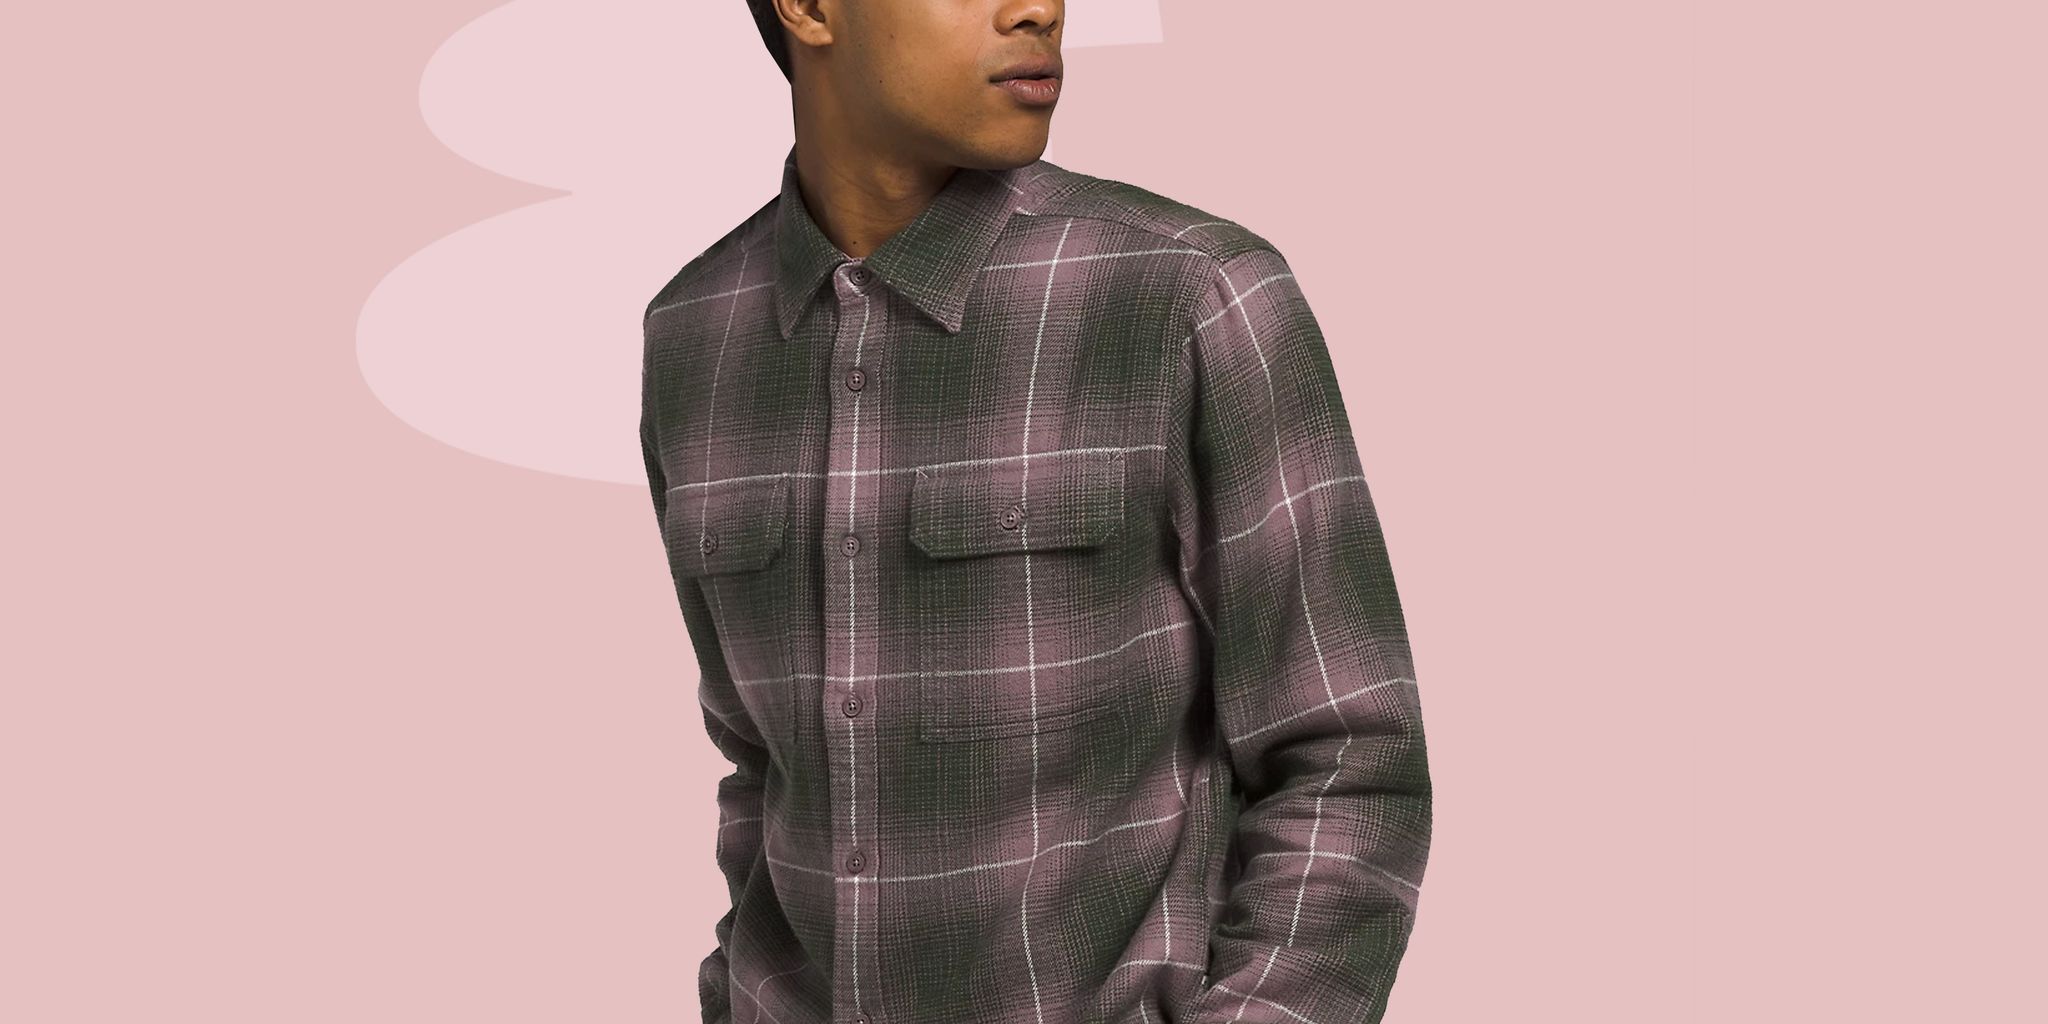 Men's Check Shirts - Plaid & Flannel Shirts